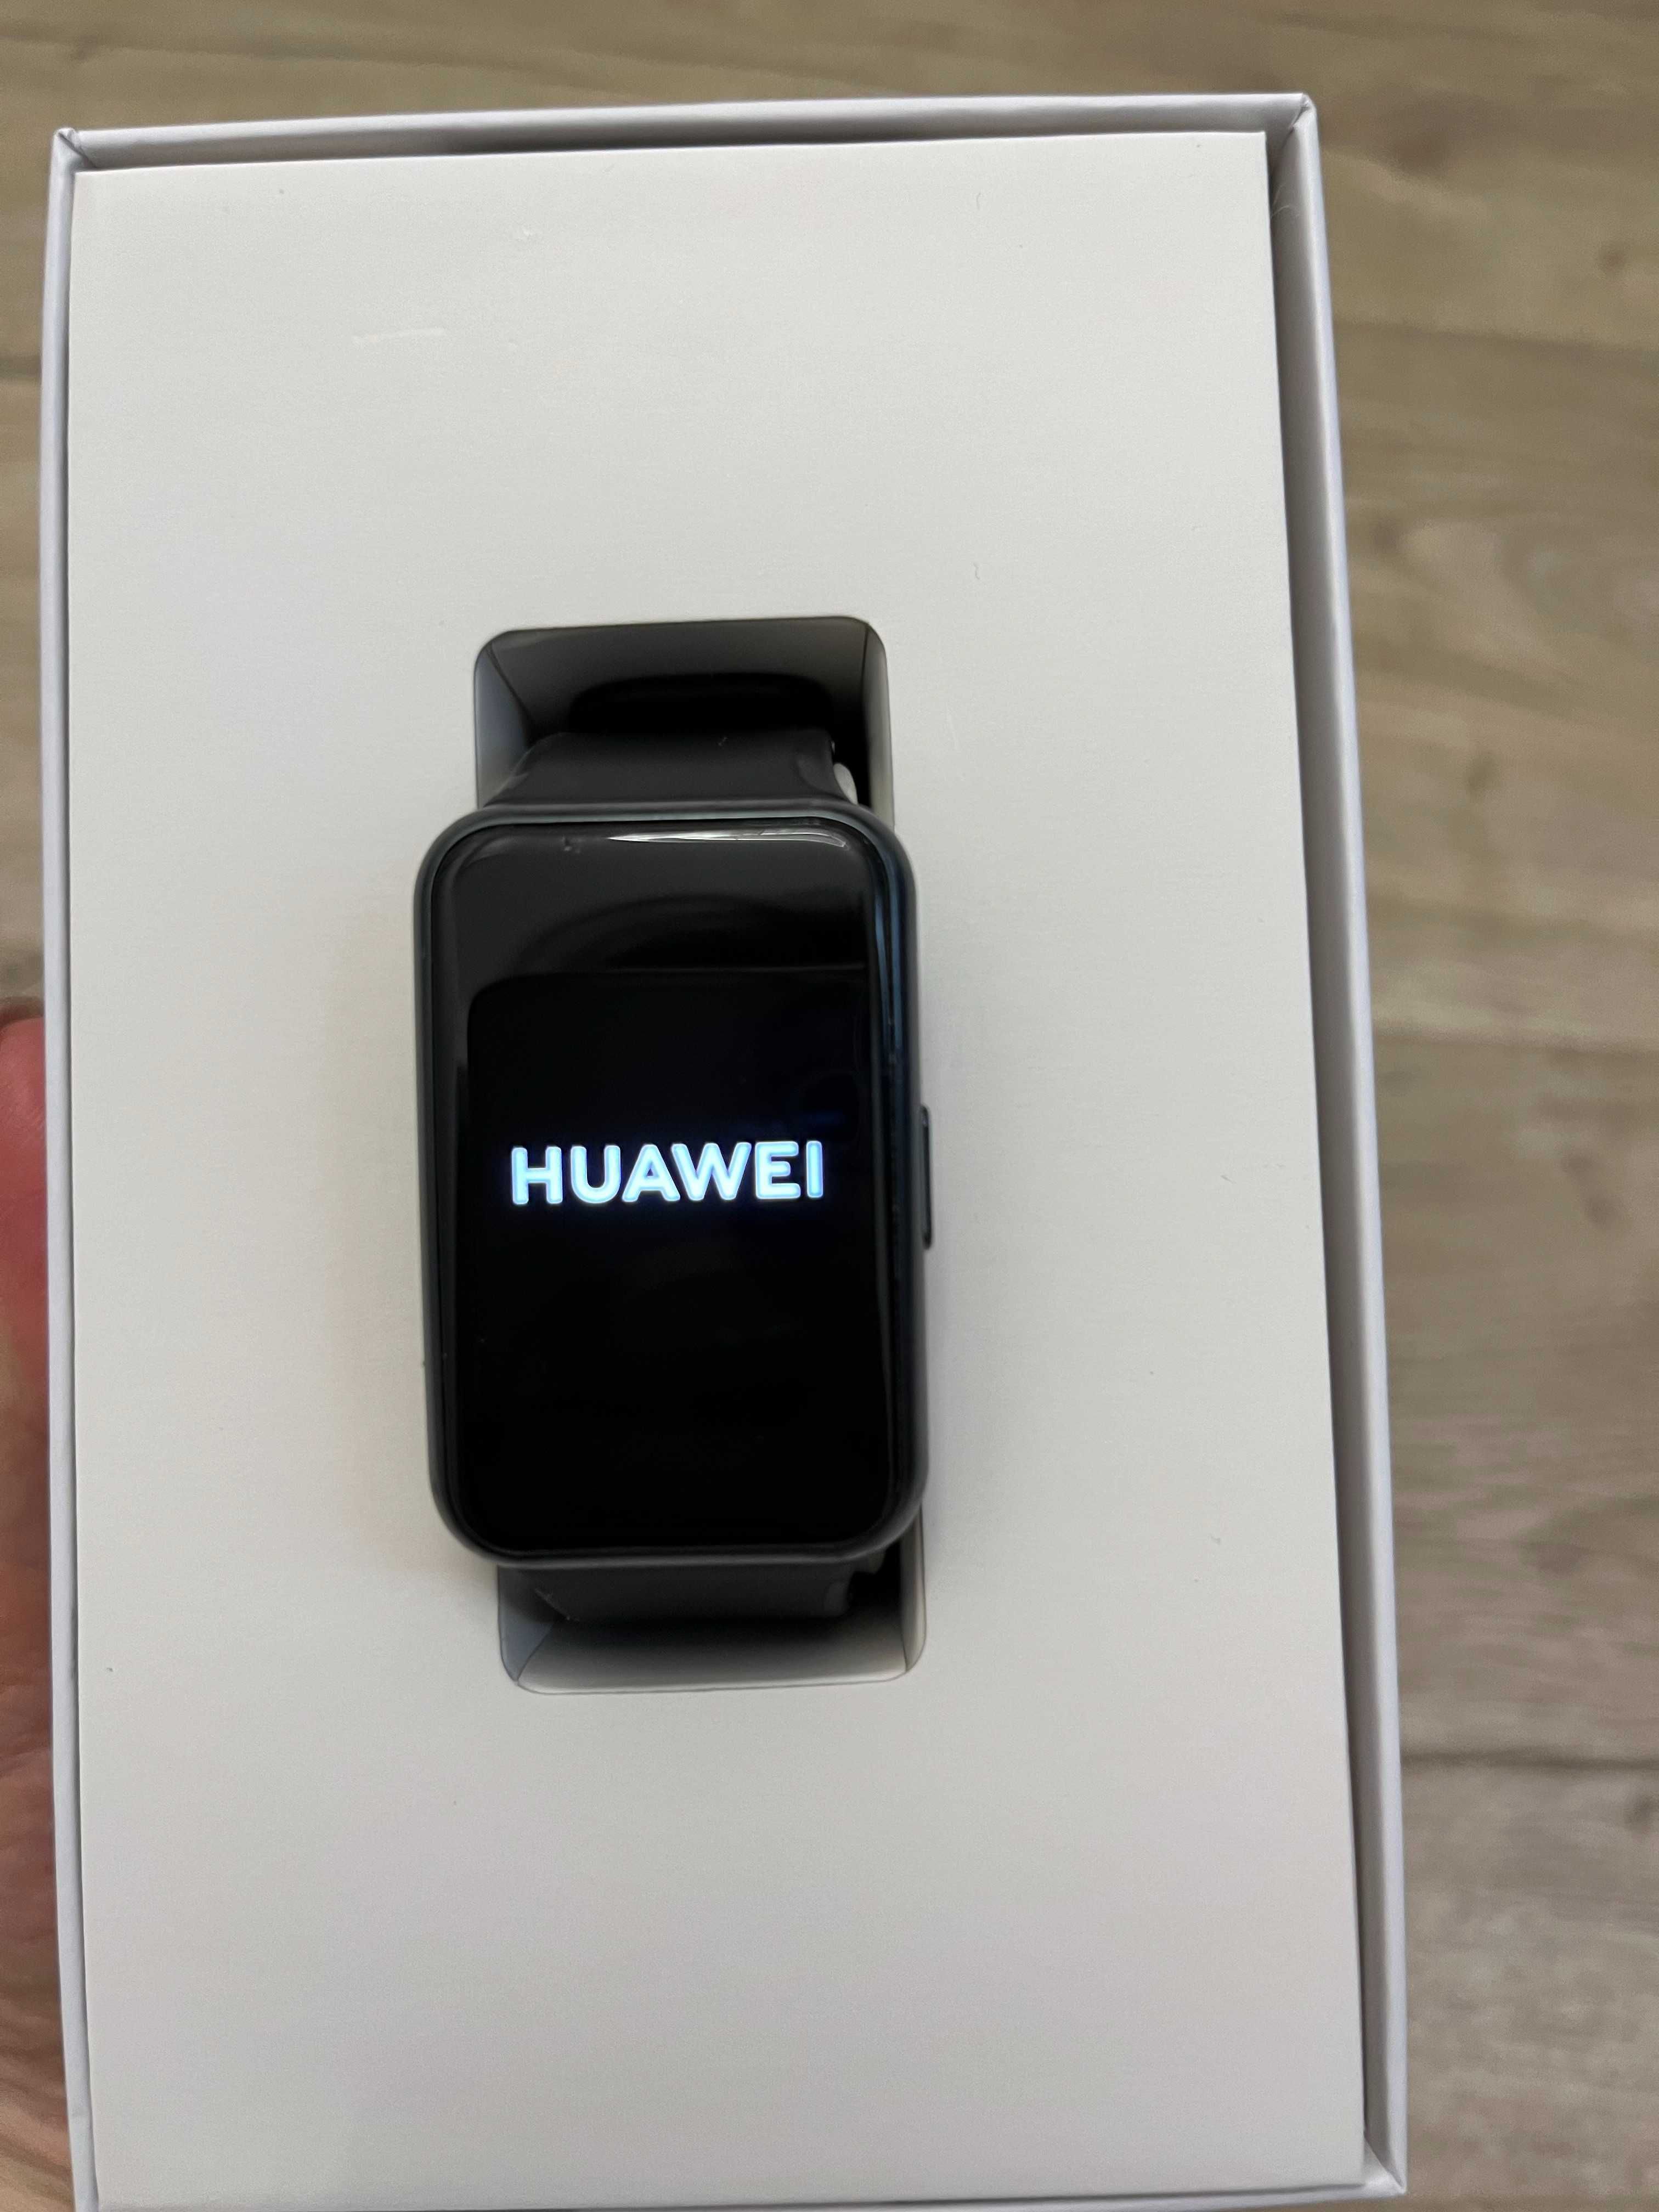 !!!GRATISY!!! - Huawei Smartwatch Fit - bransOLETKA i etui - GRATIS!!!